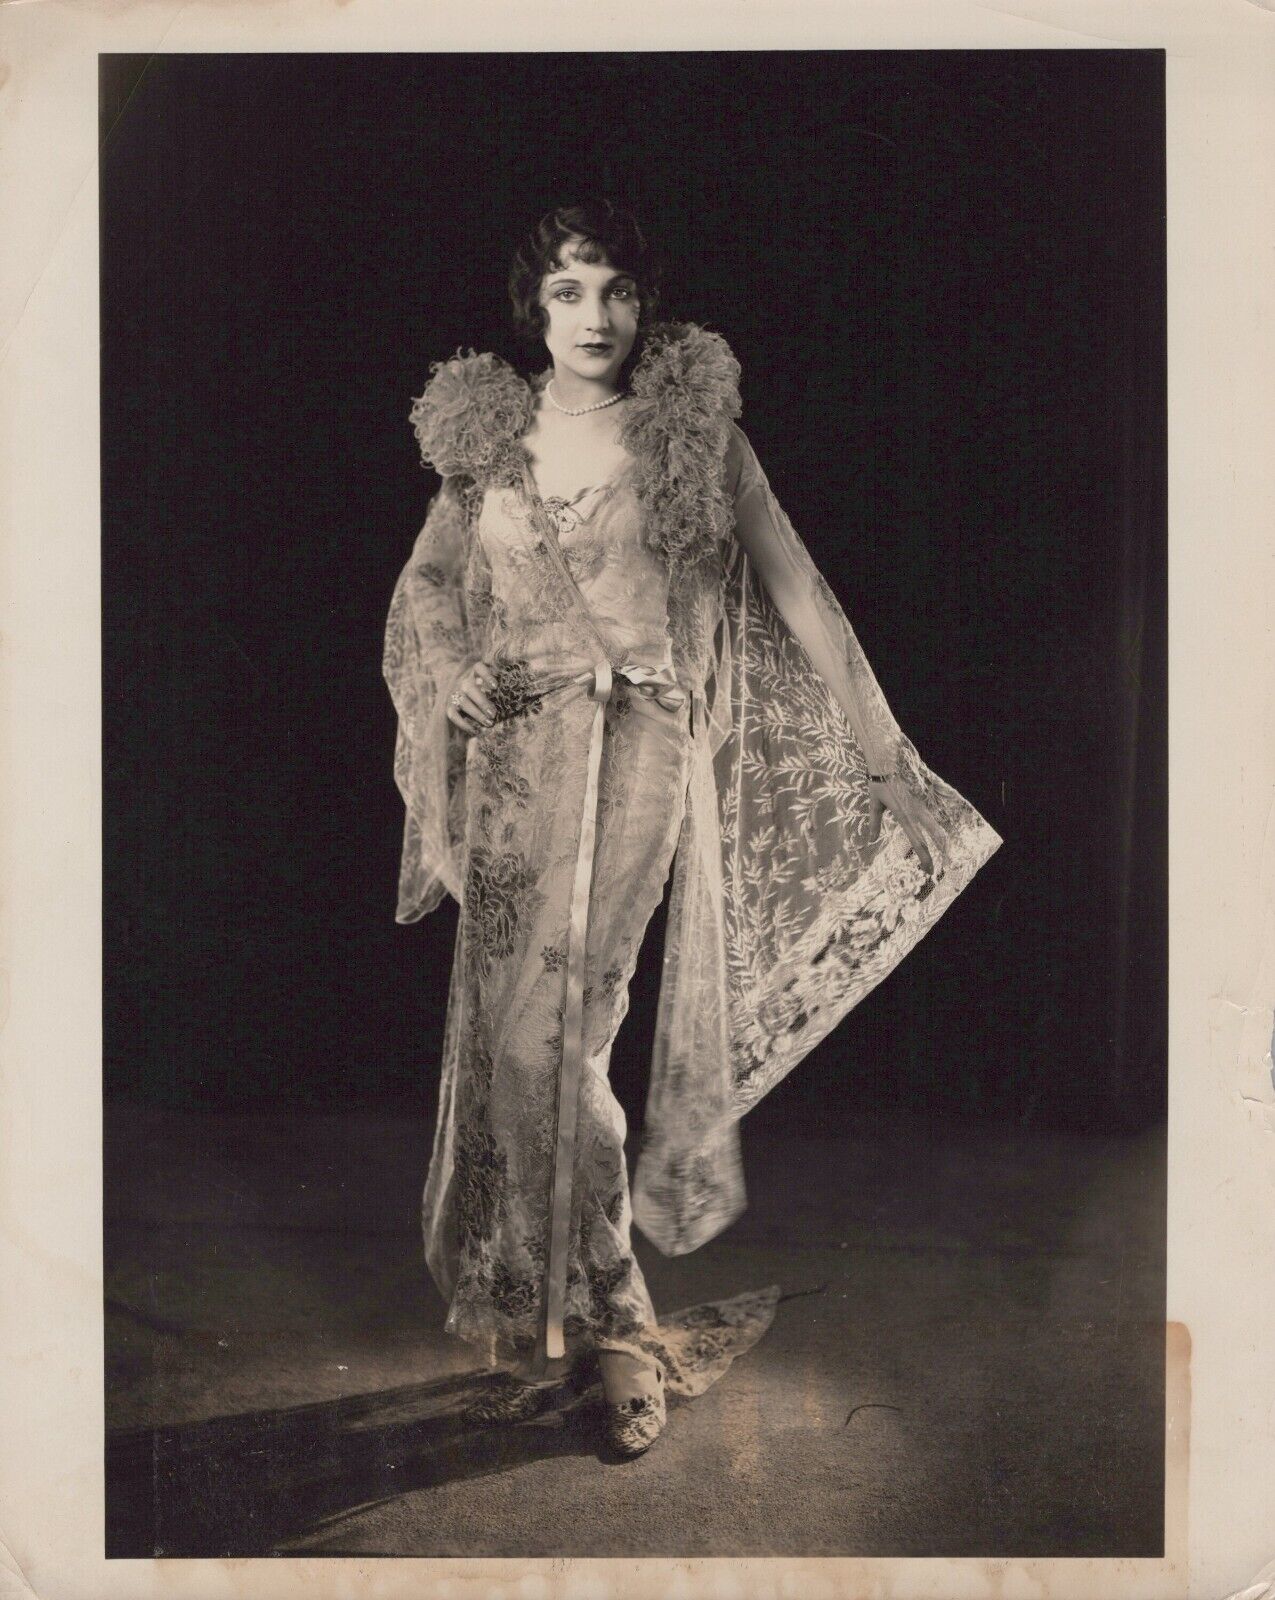 HOLLYWOOD BEAUTY SILENT FILM STYLISH POSE STUNNING PORTRAIT 1930s Photo C41